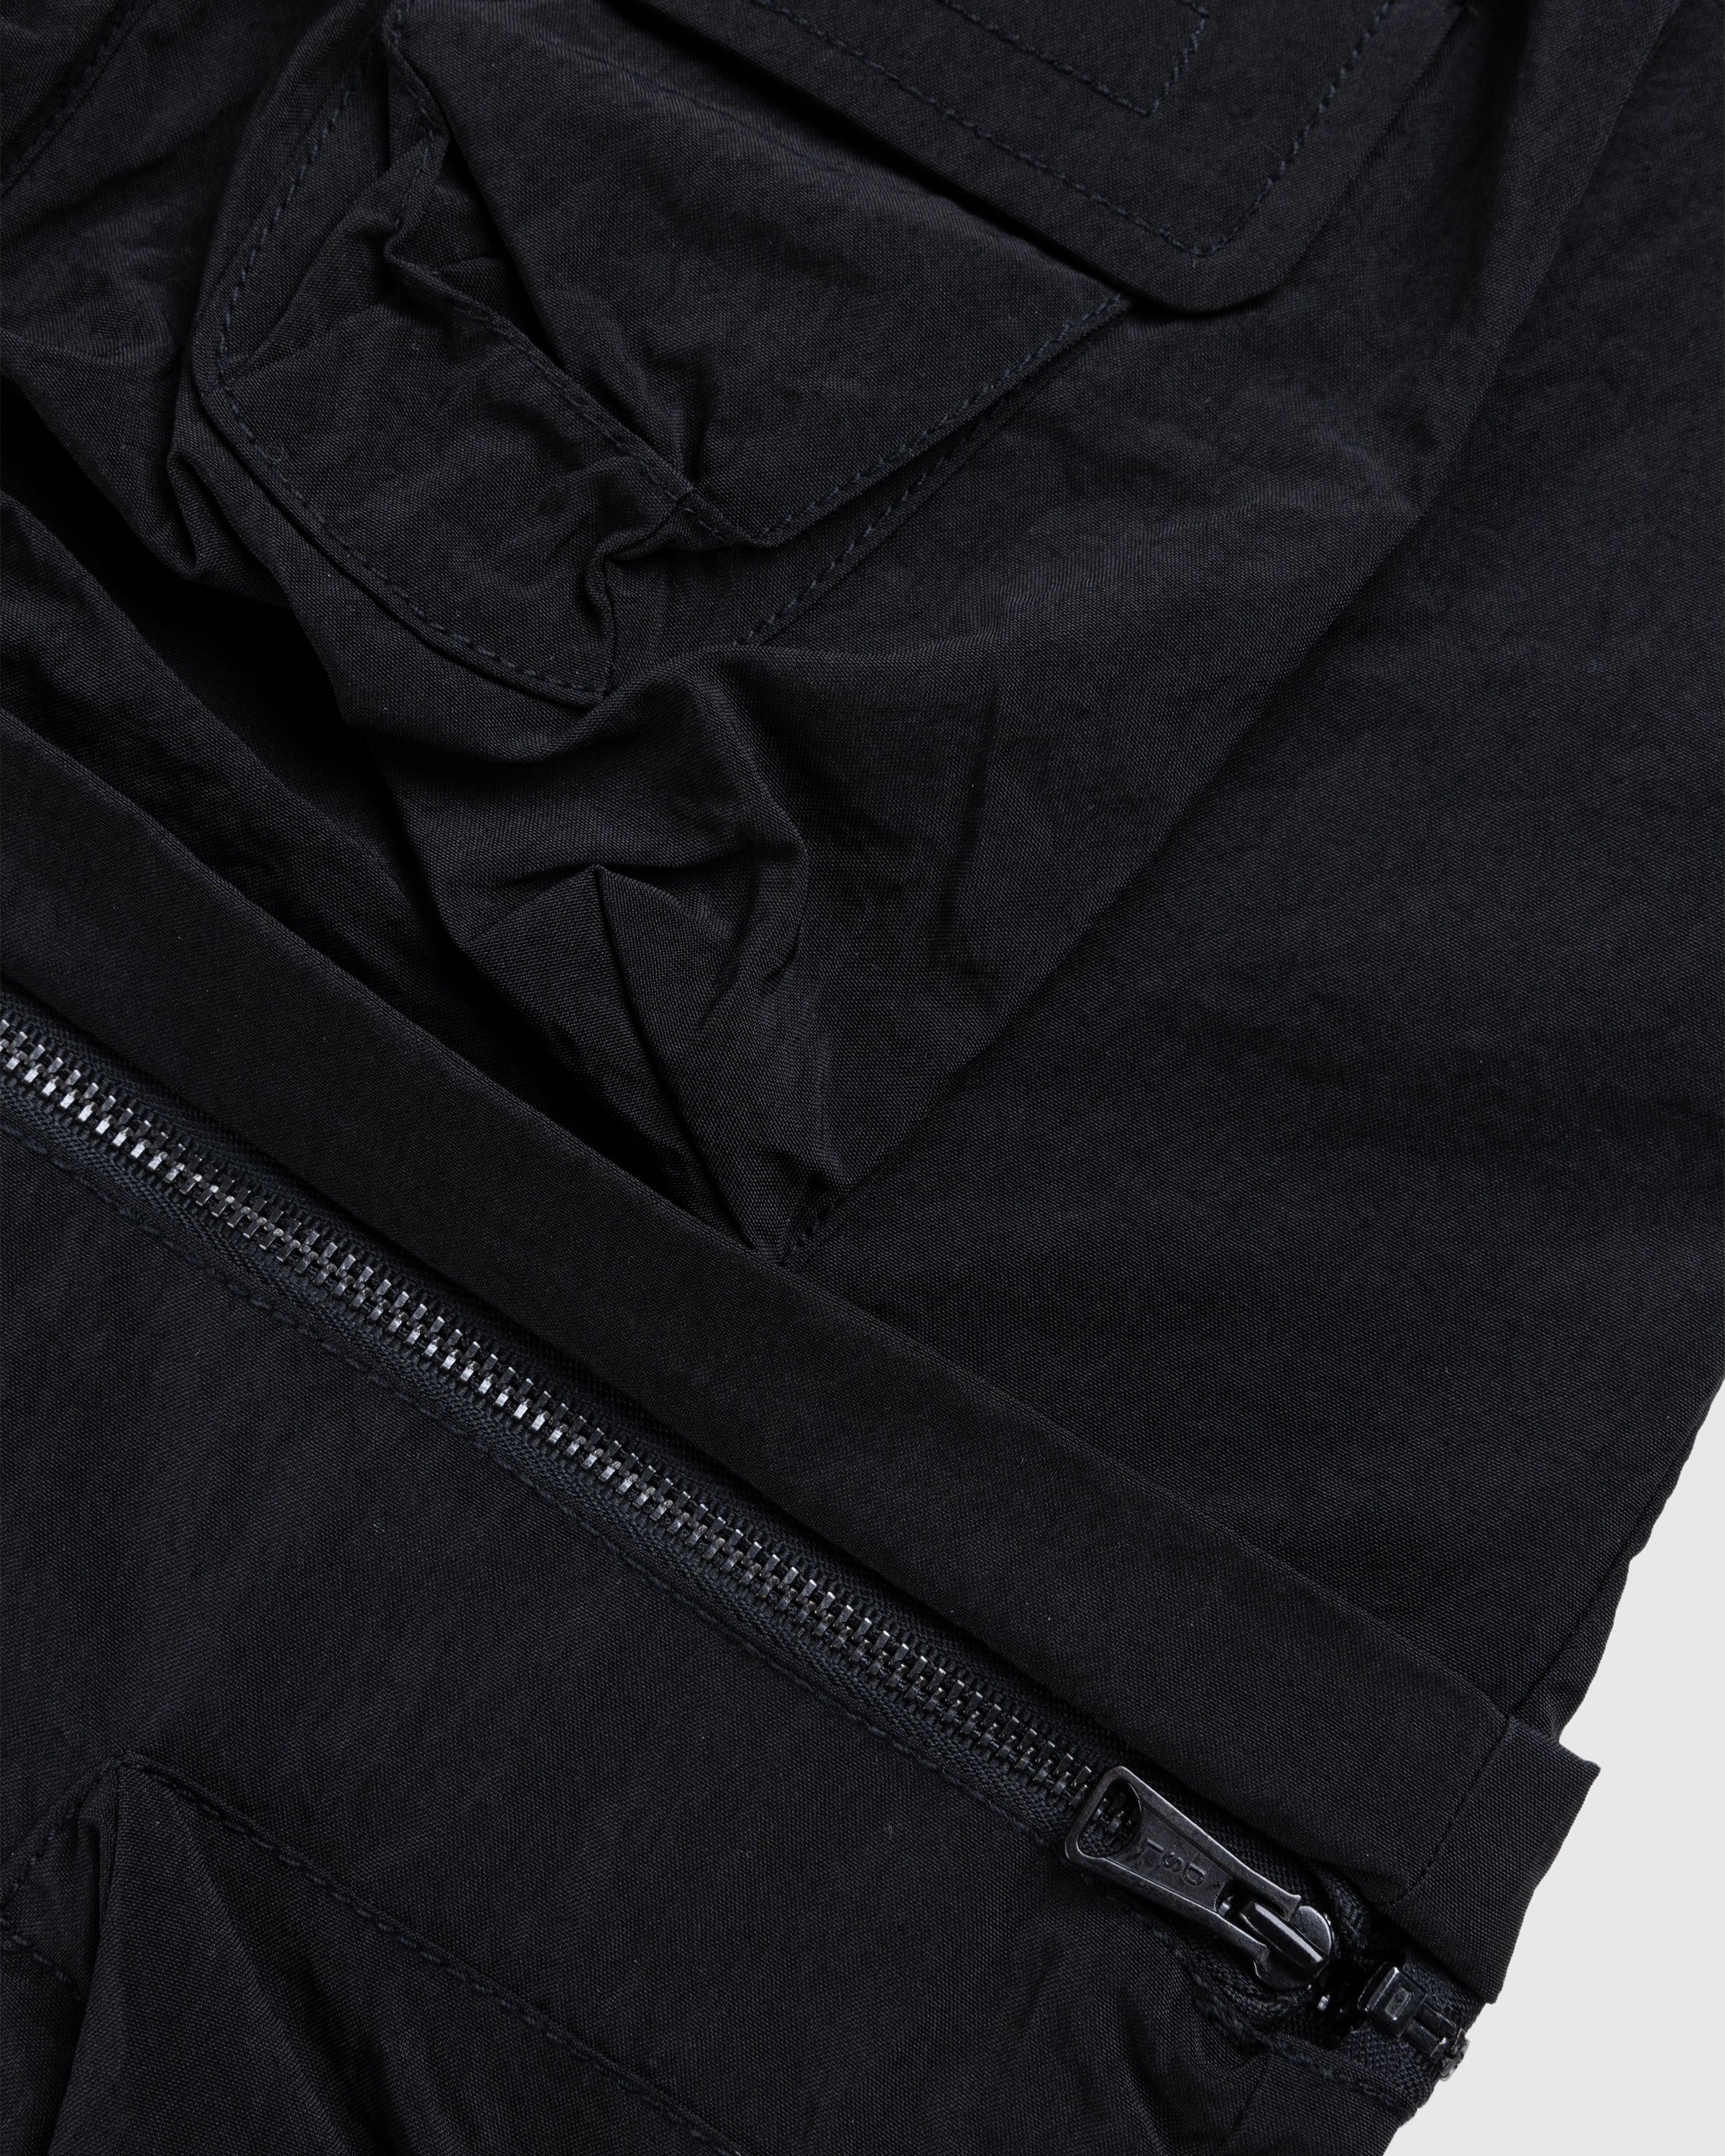 Diesel – P-Staind Cargo Trousers Black | Highsnobiety Shop